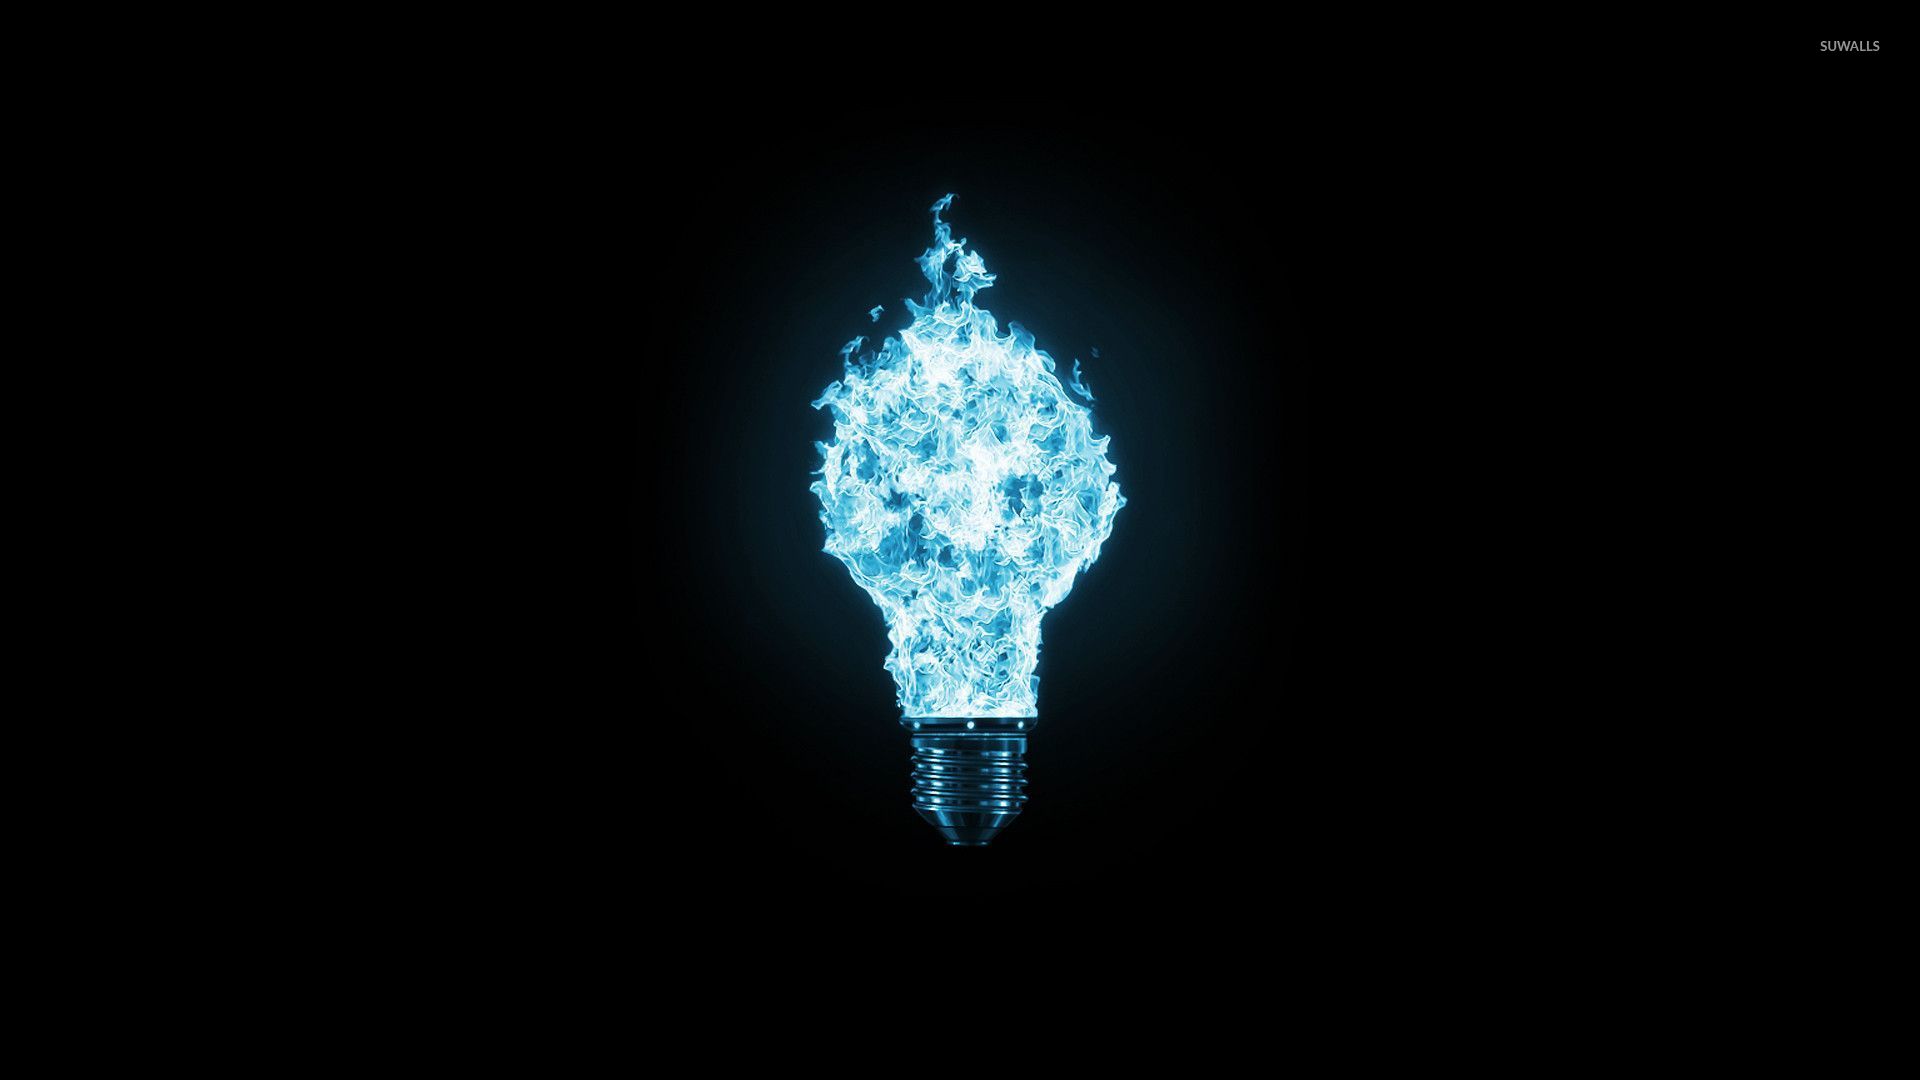 Blue flaming light bulb wallpaper - 1121208